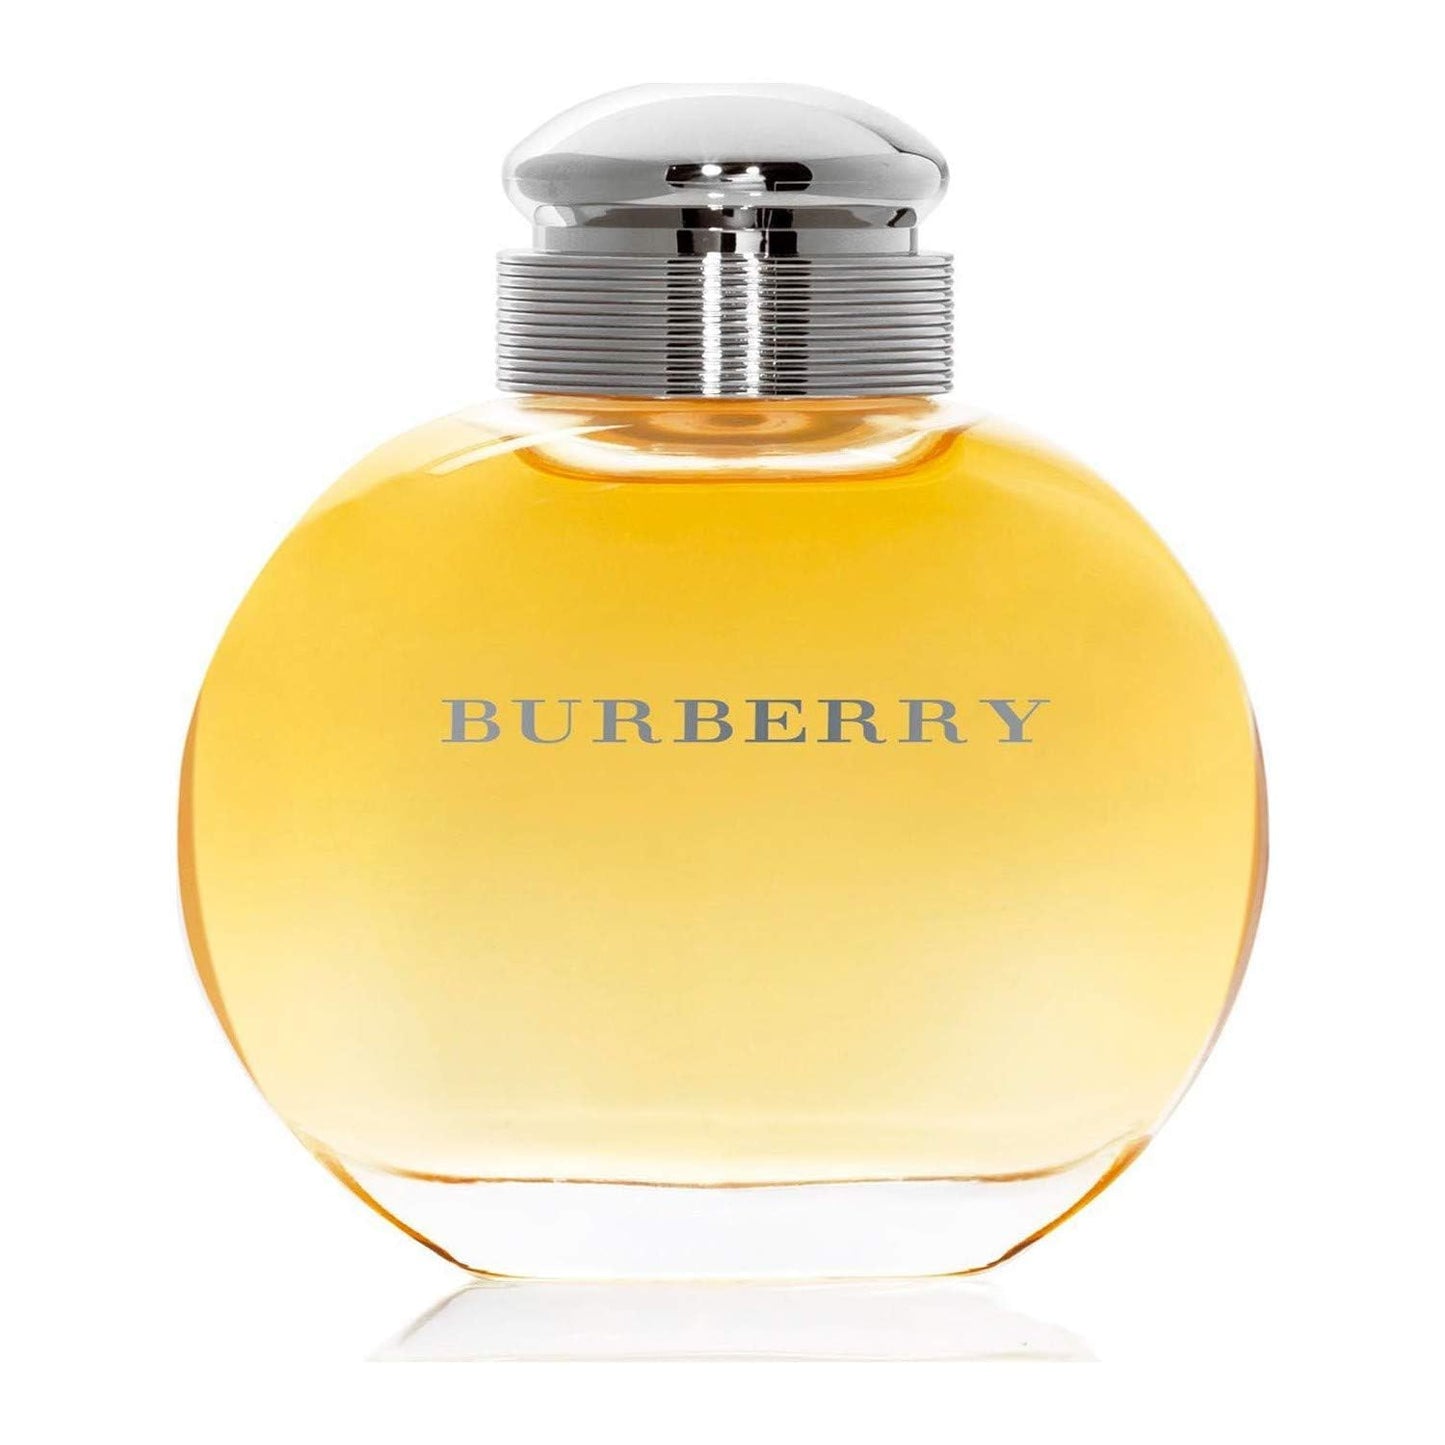 Burberry Perfume - Burberry - perfumes for women, 50 ml - EDP Spray